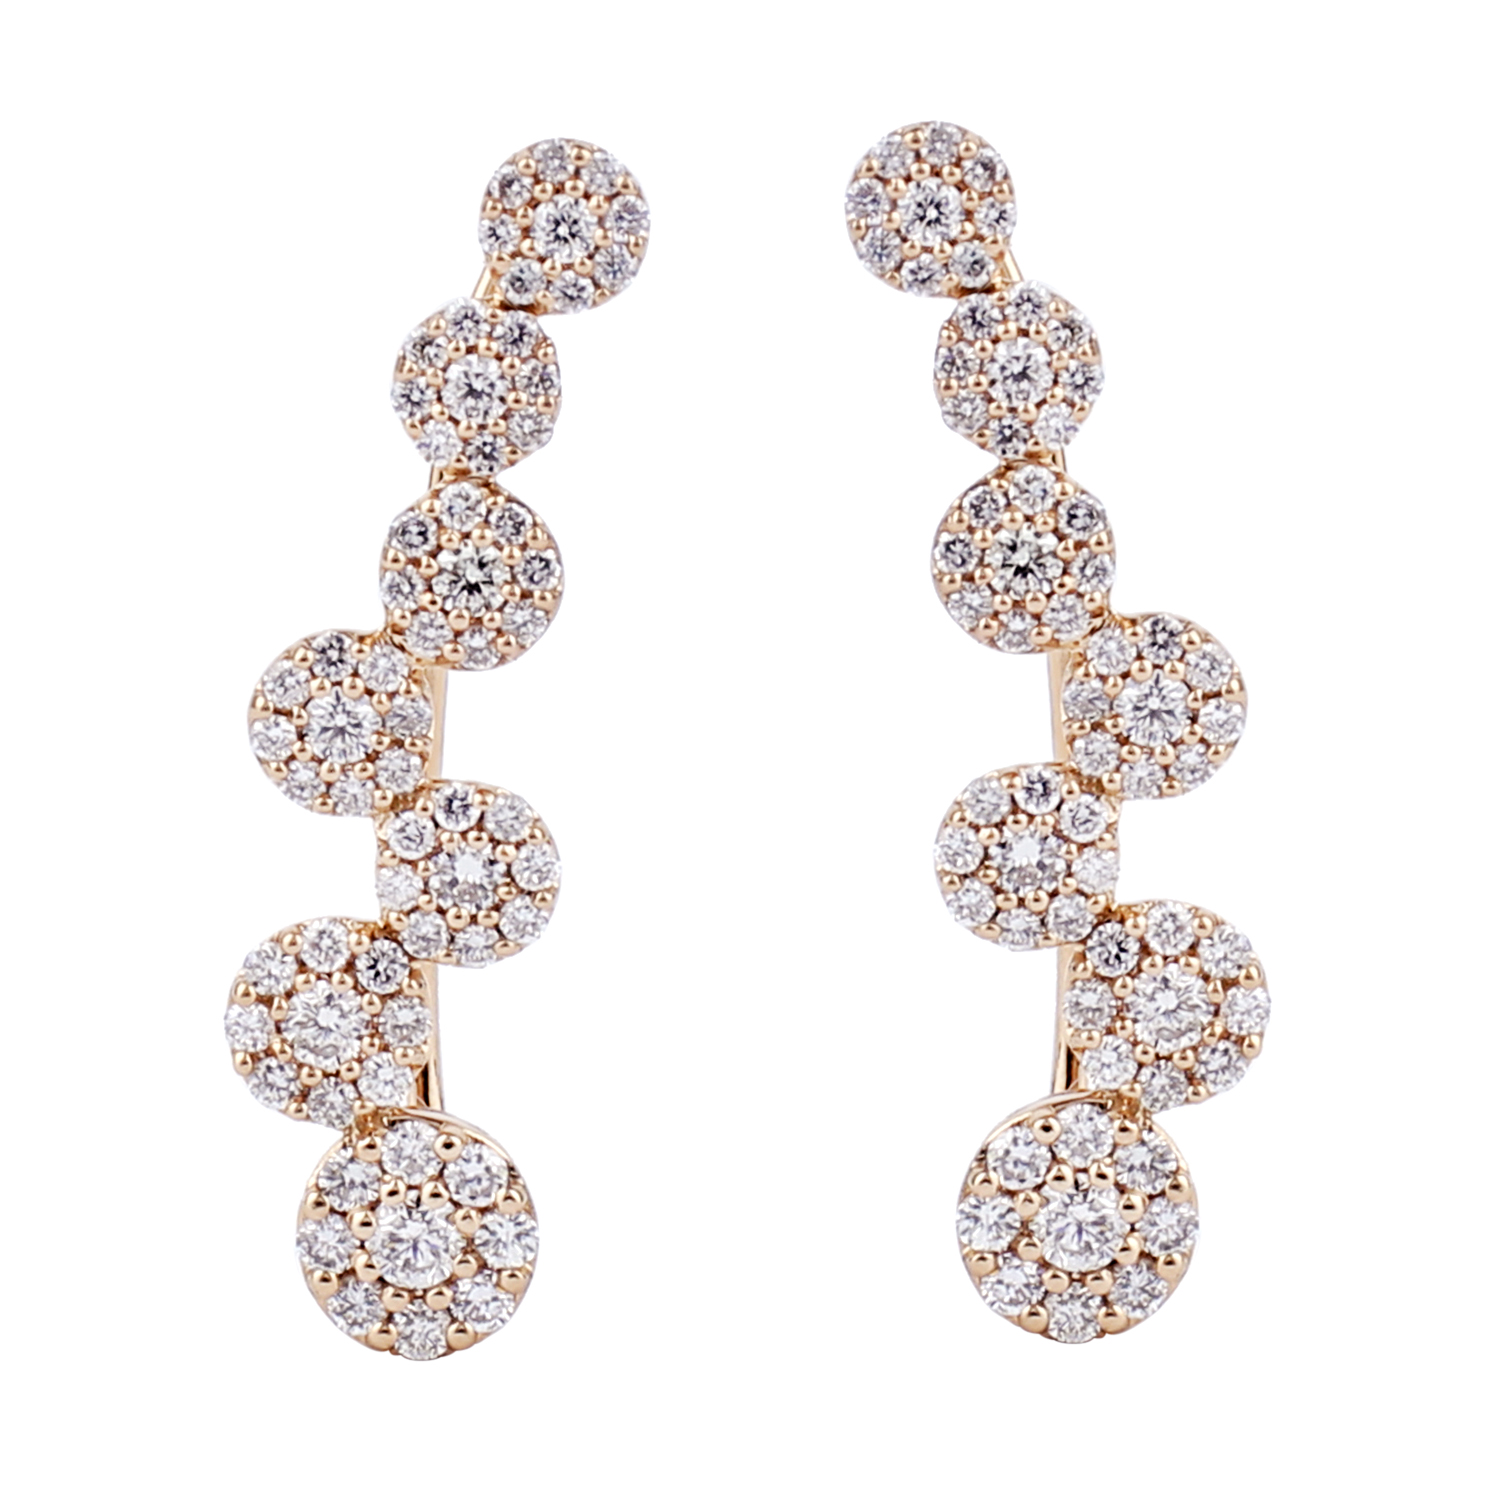 1.2ct Natural Diamond Ear climber Earrings 18k Rose Gold Jewelry | eBay